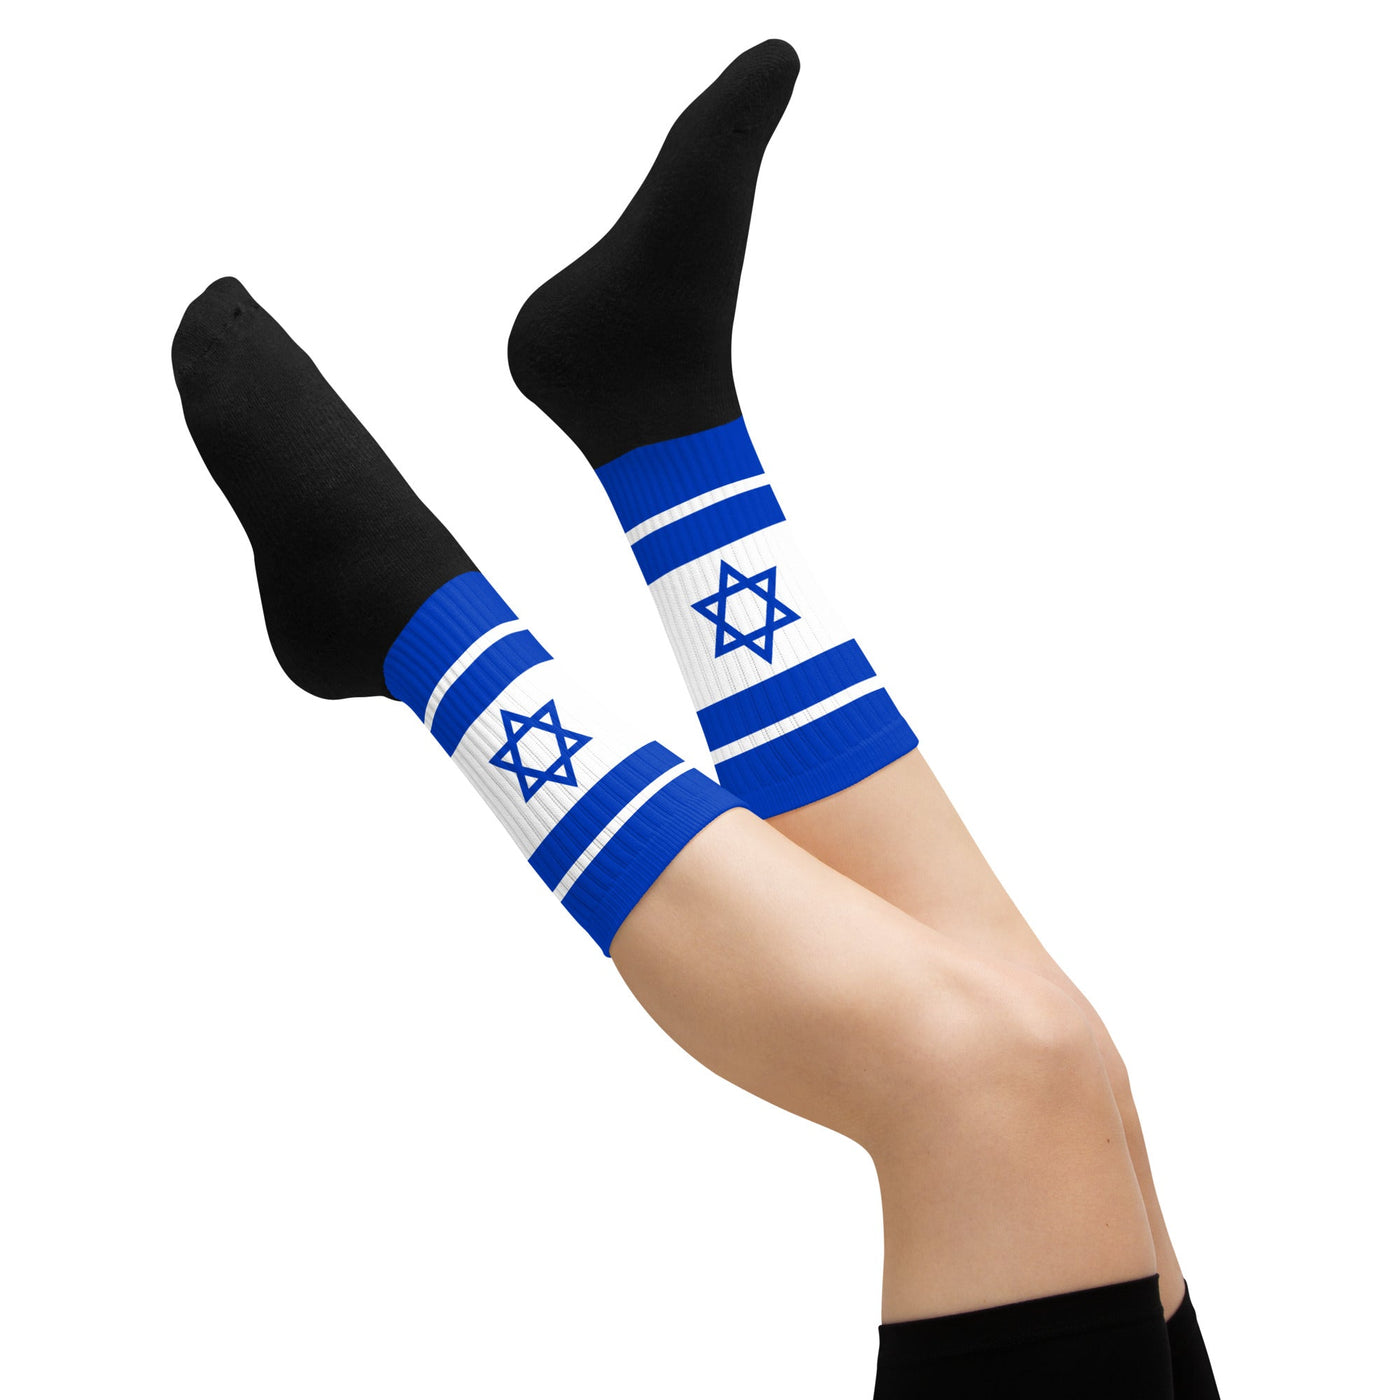 Israel Socks - Ezra's Clothing